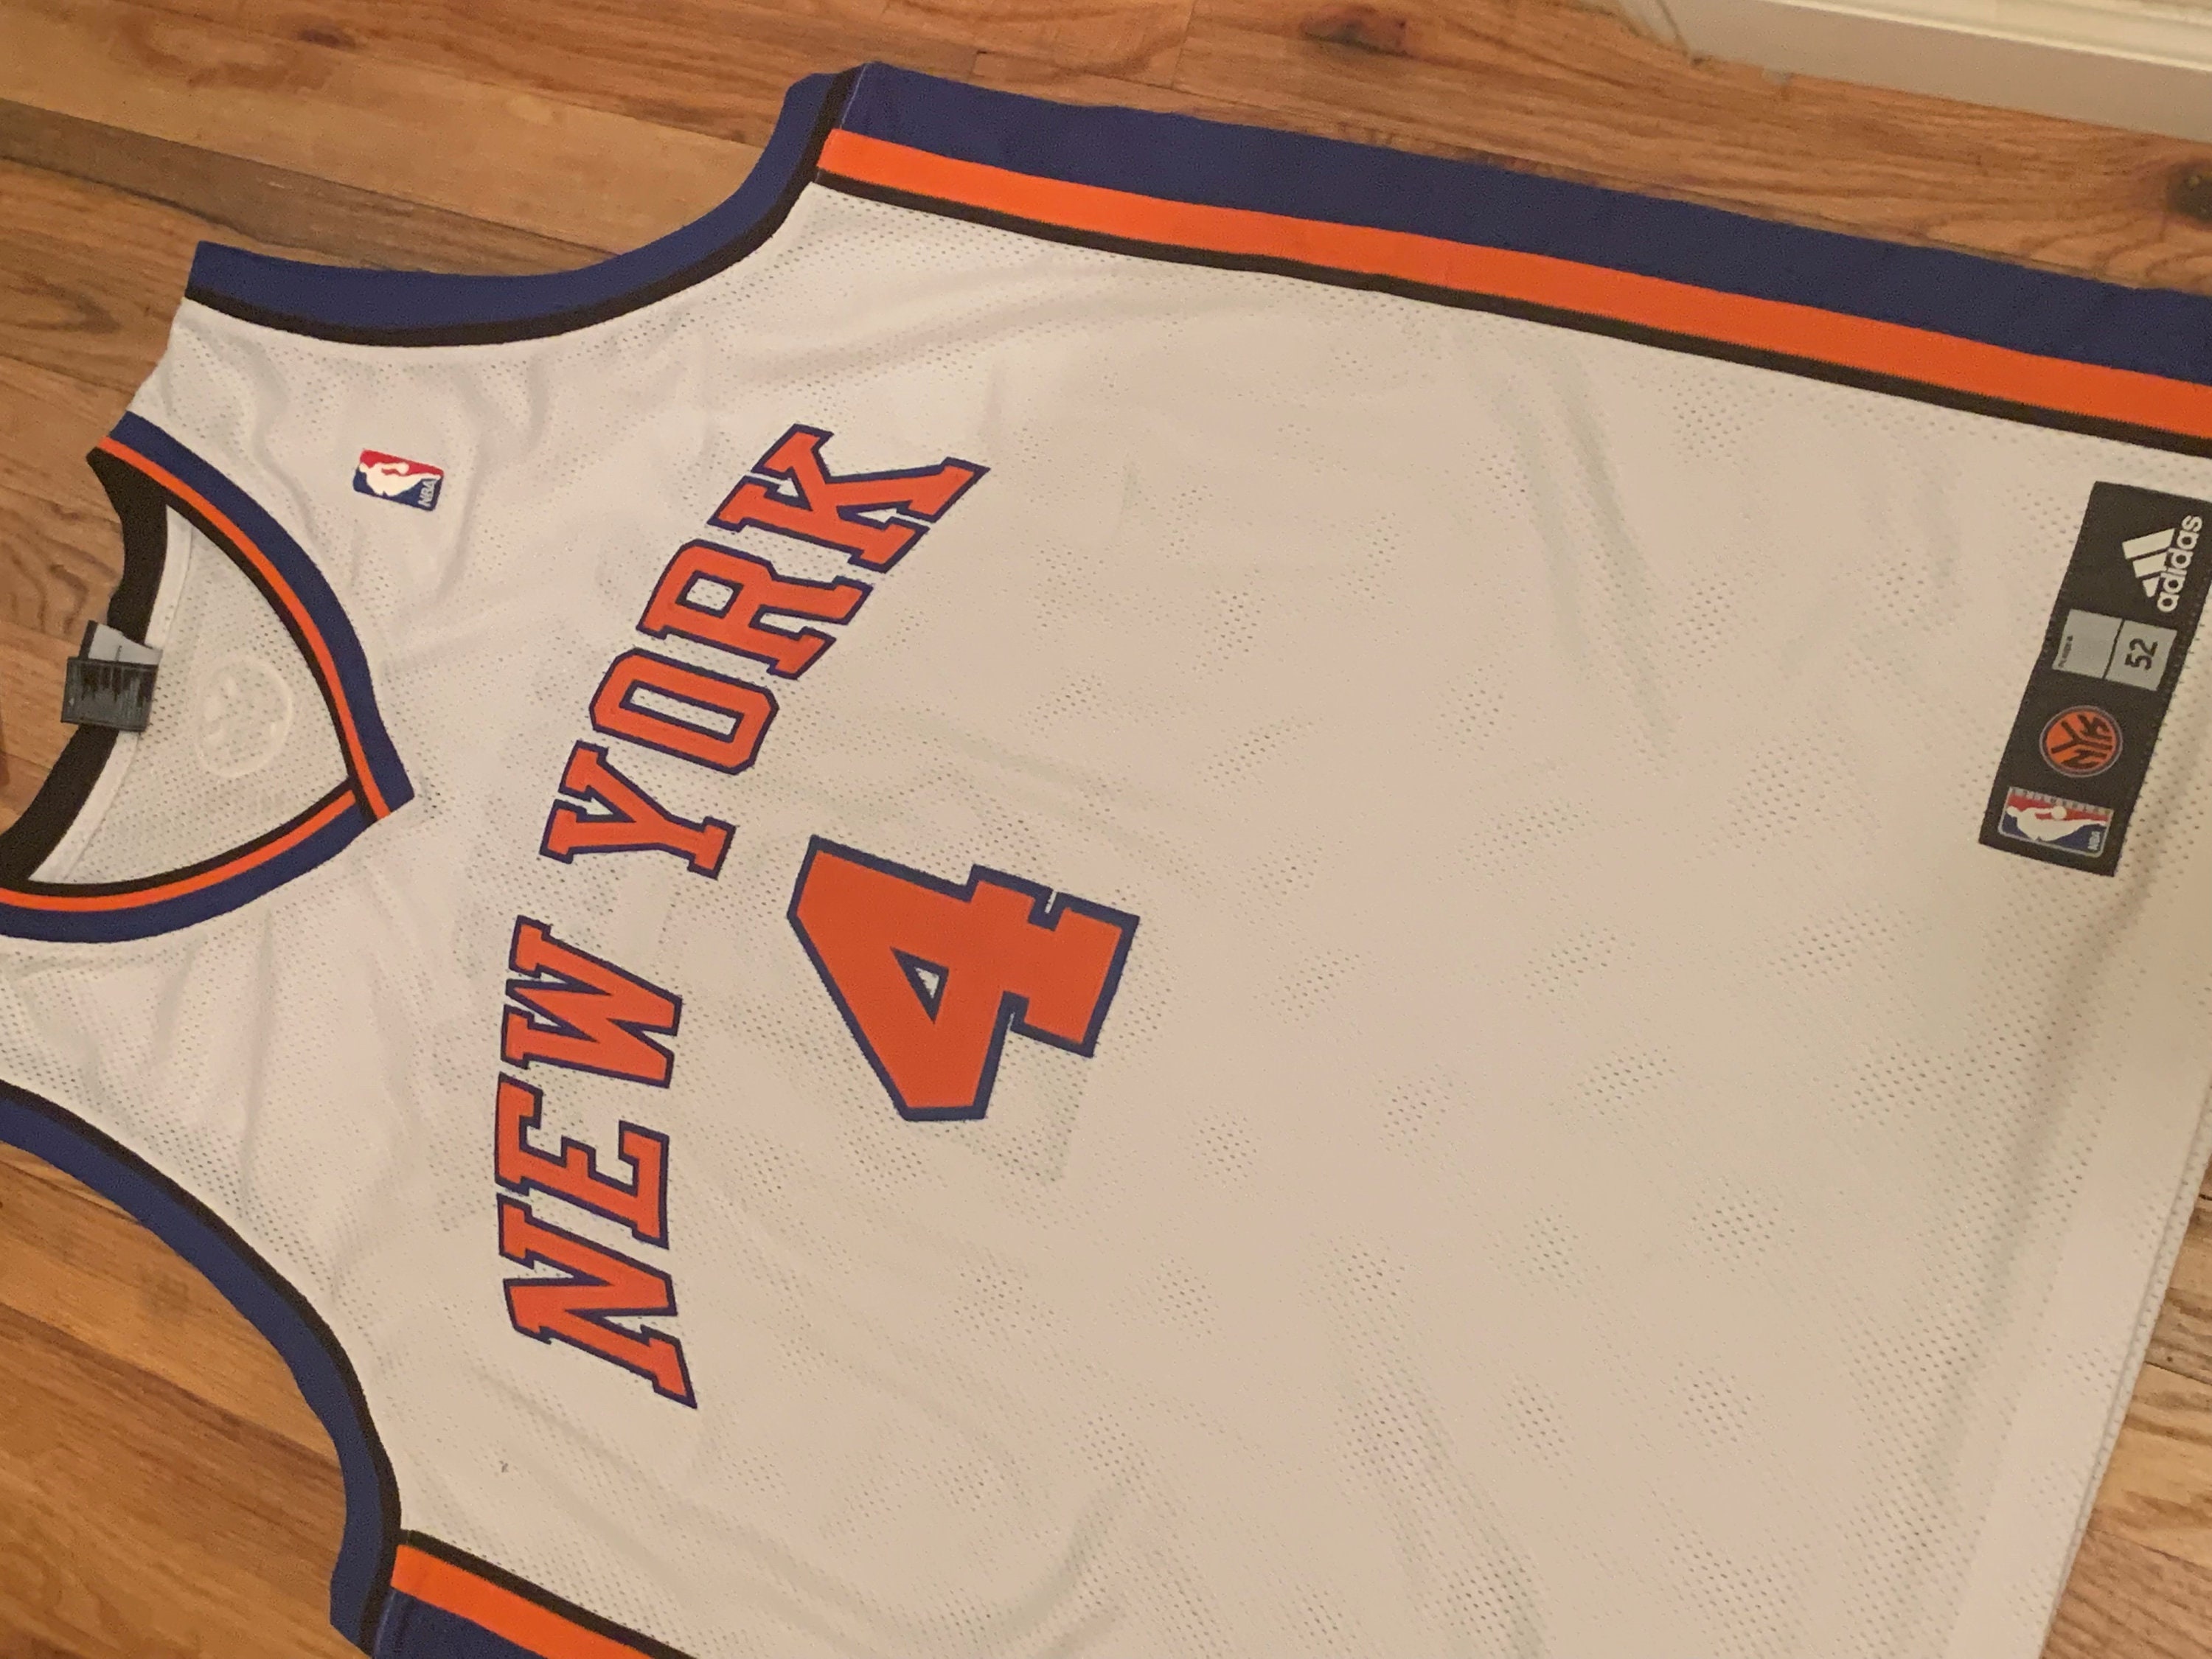 Nate Robinson Signed New York Knicks Custom NBA Style Jersey (Beckett –